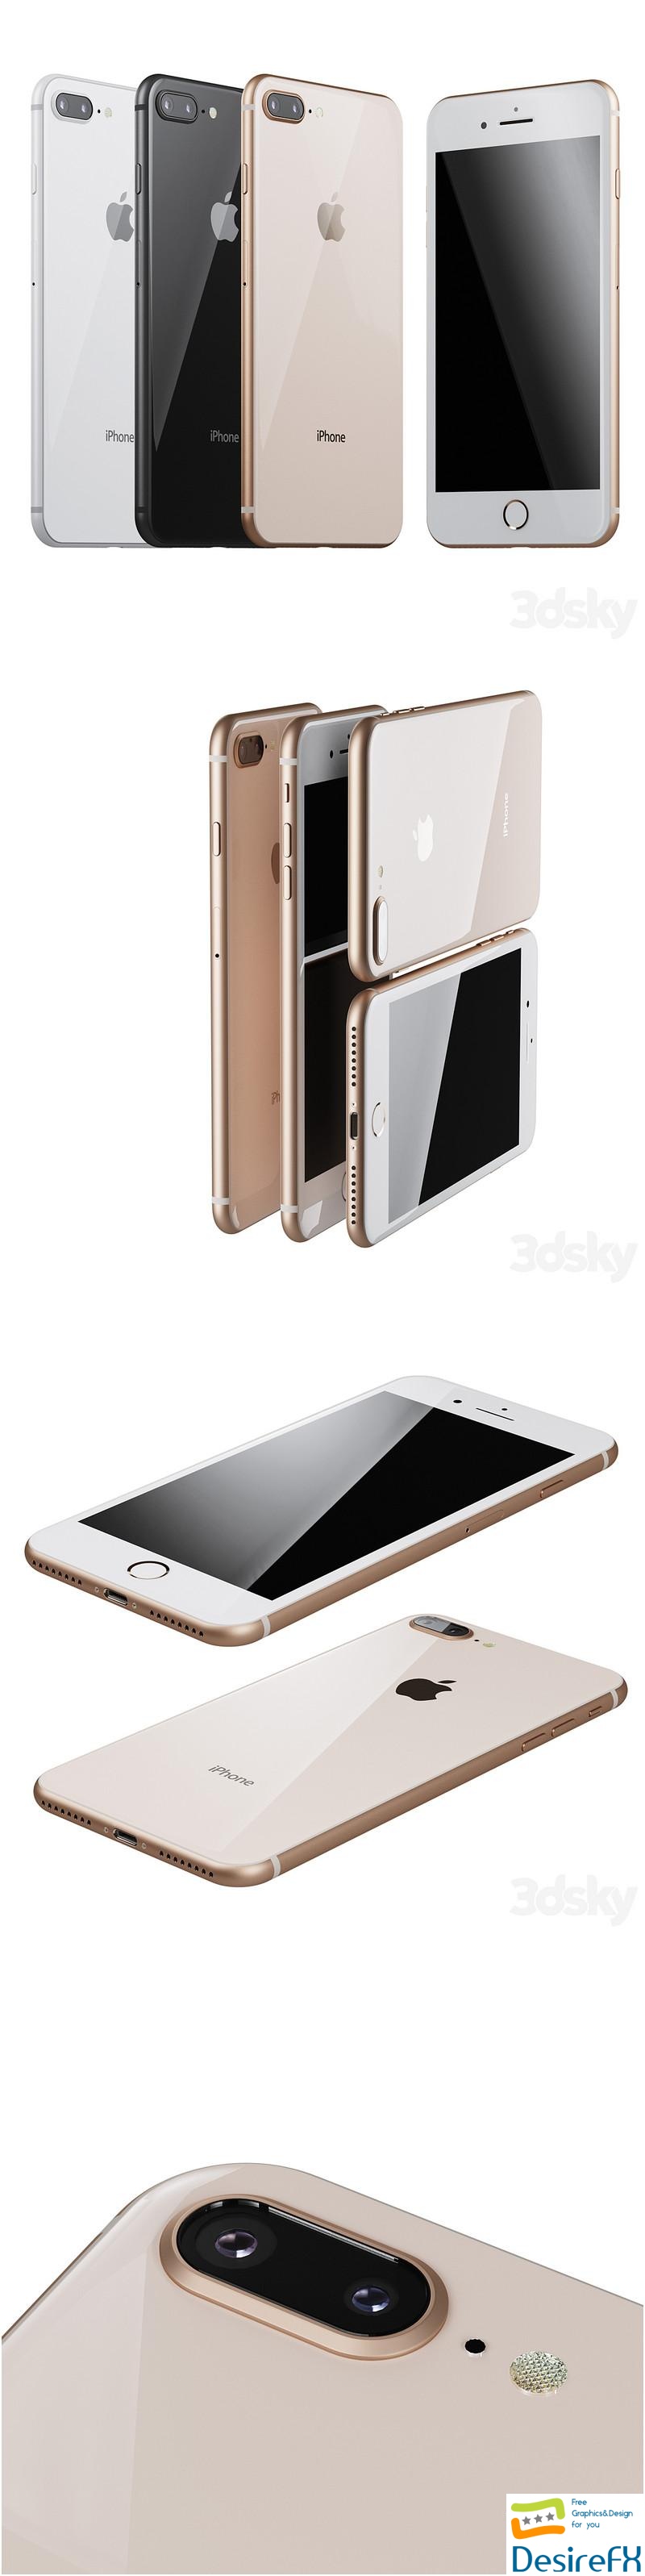 Apple iPhone 8 plus phone 3D Model